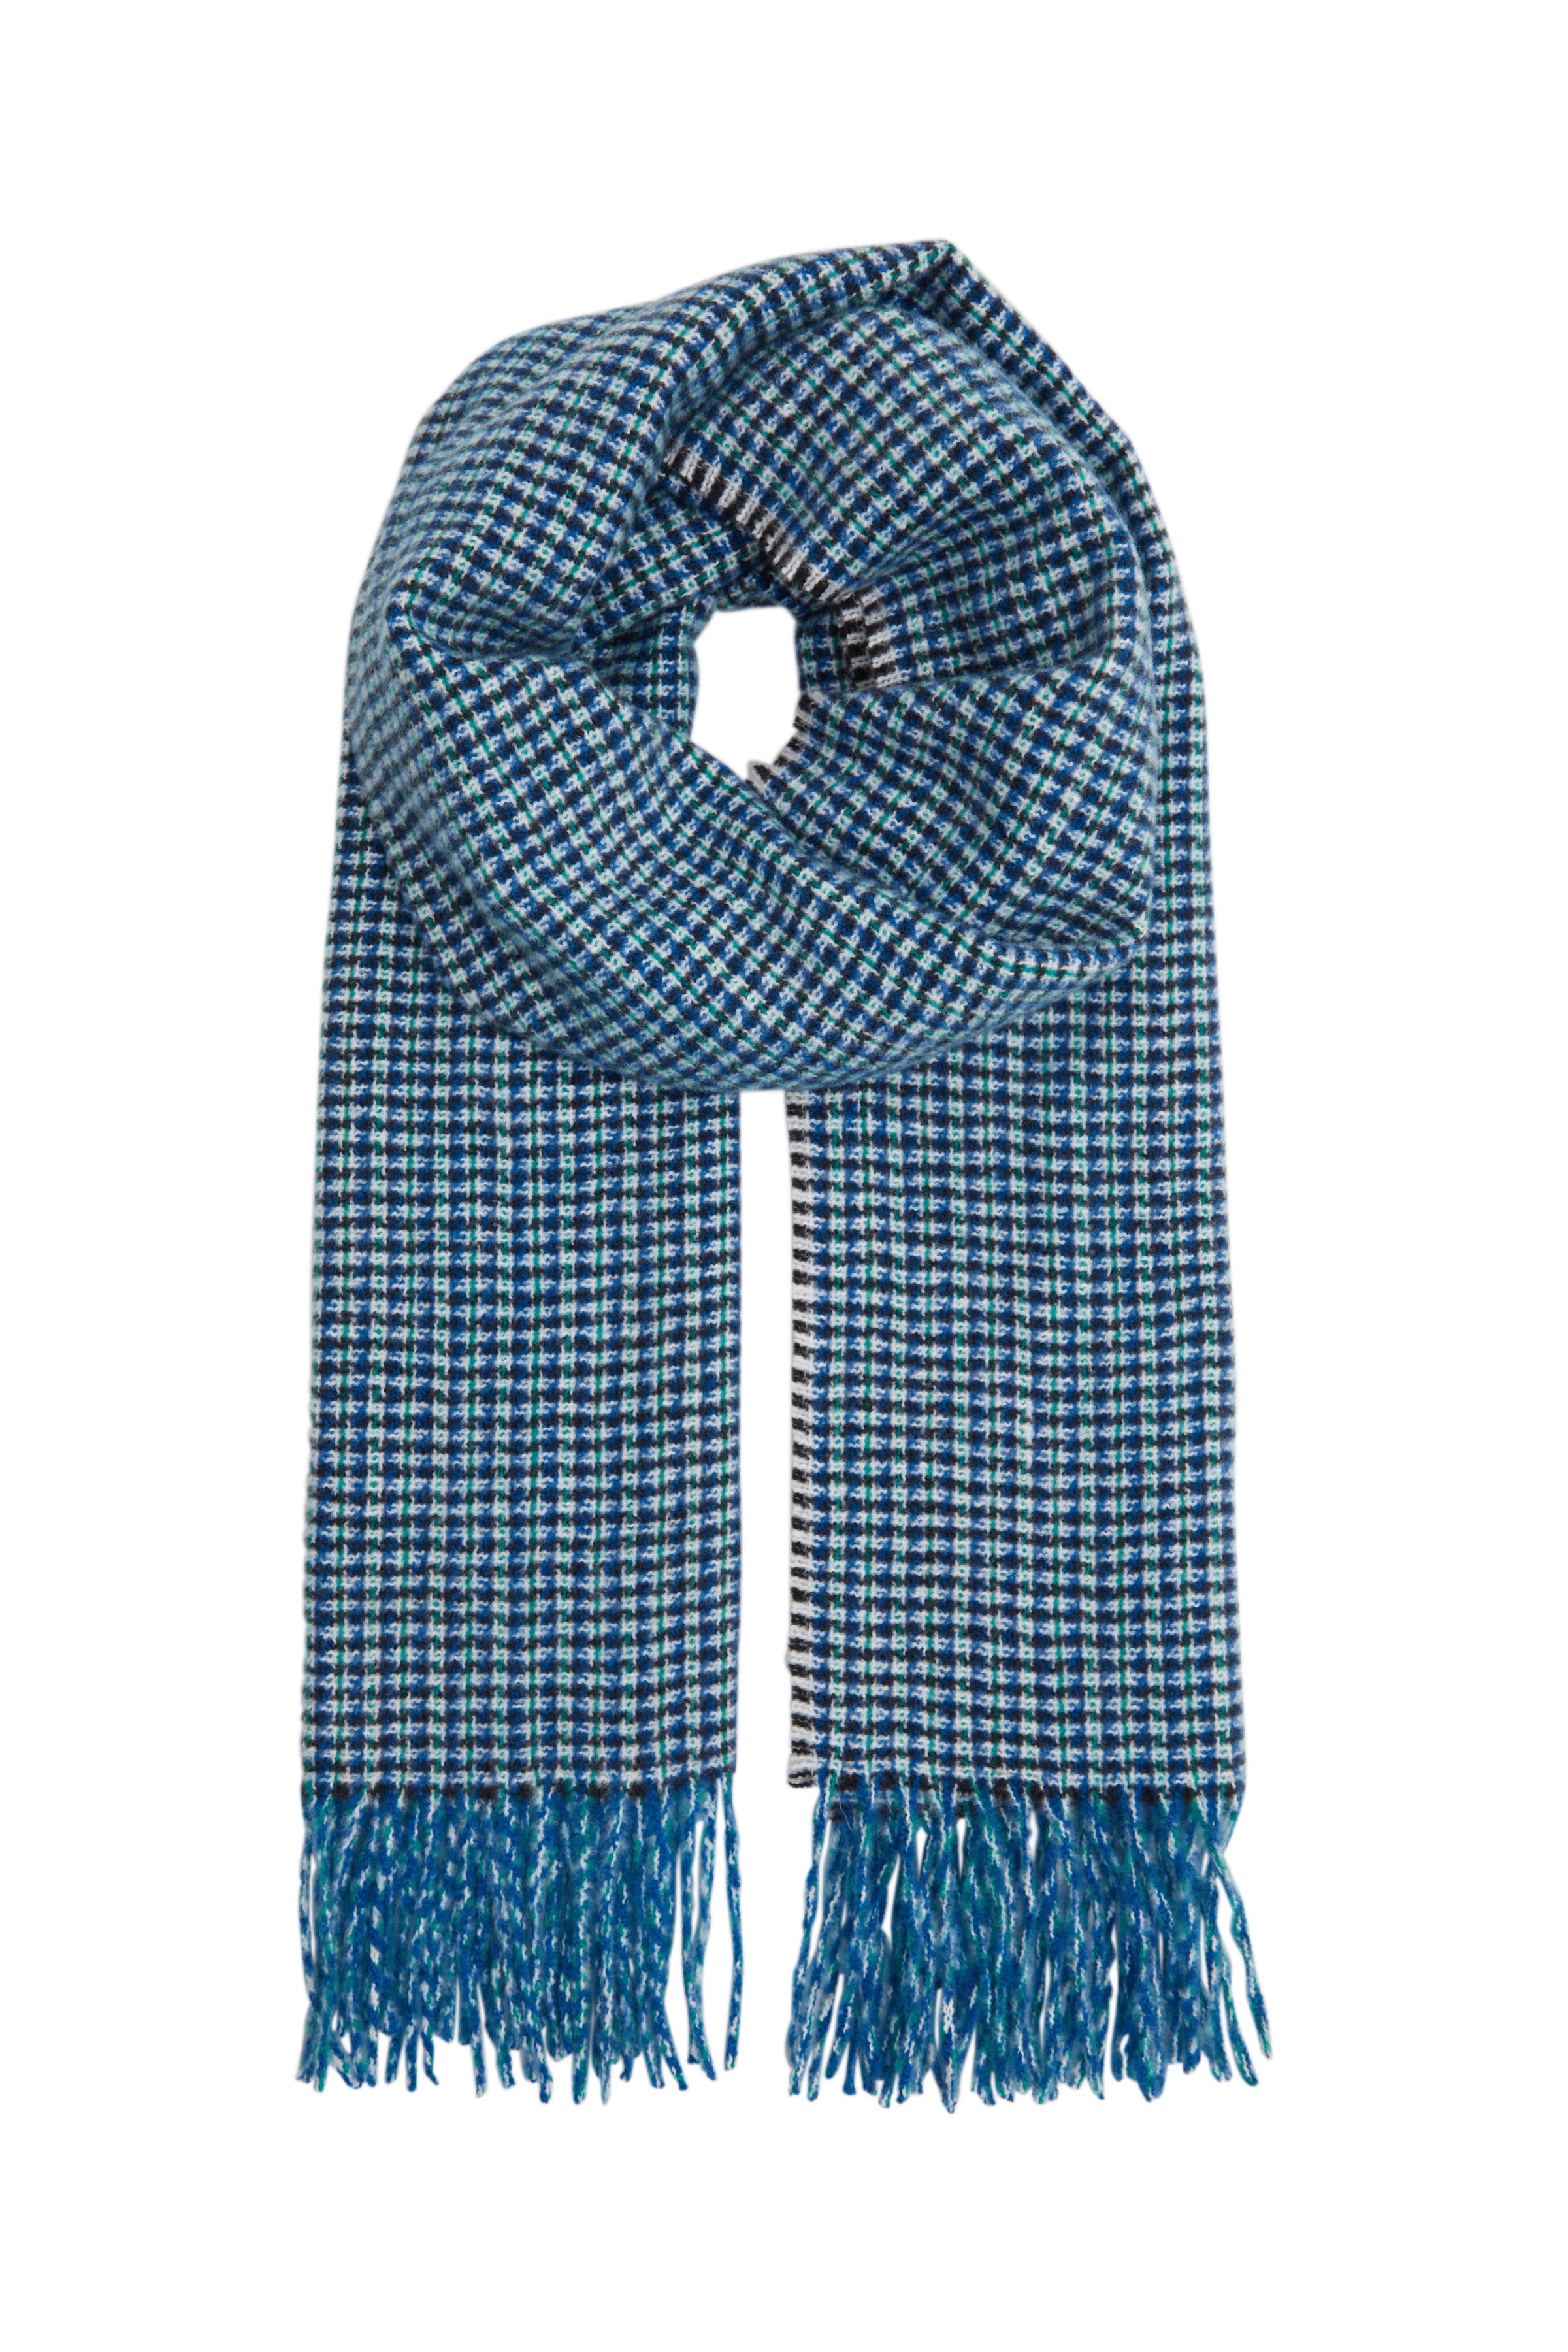 Iagina blue and white scarf | Ichi